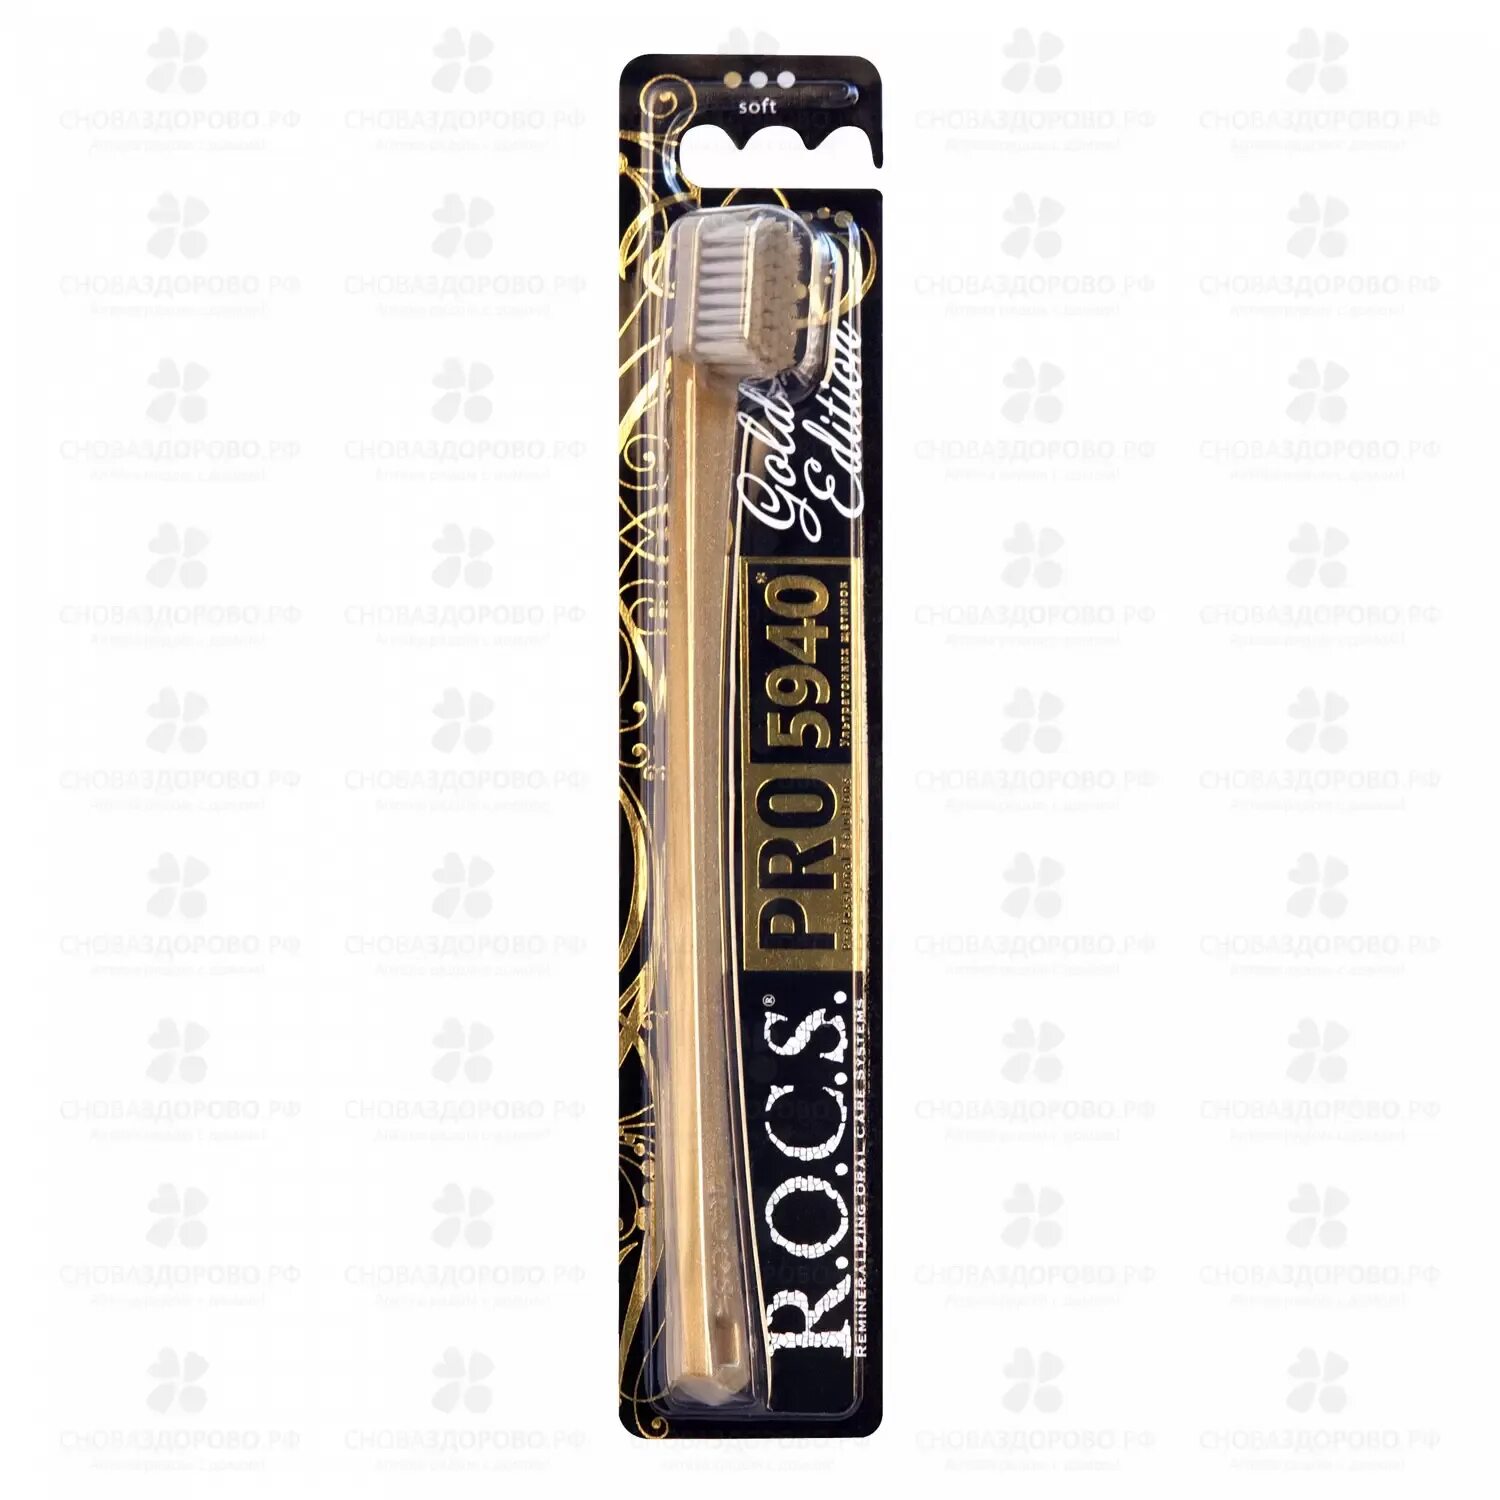 Зубная щетка Rocs Рокс Pro мягкая 5940. Зубная щетка r.o.c.s. Pro 5940 Gold Edition. Rocs зубная щетка Pro Gold Edition. Rocs зубная щетка Pro Gold Edition мягкая.